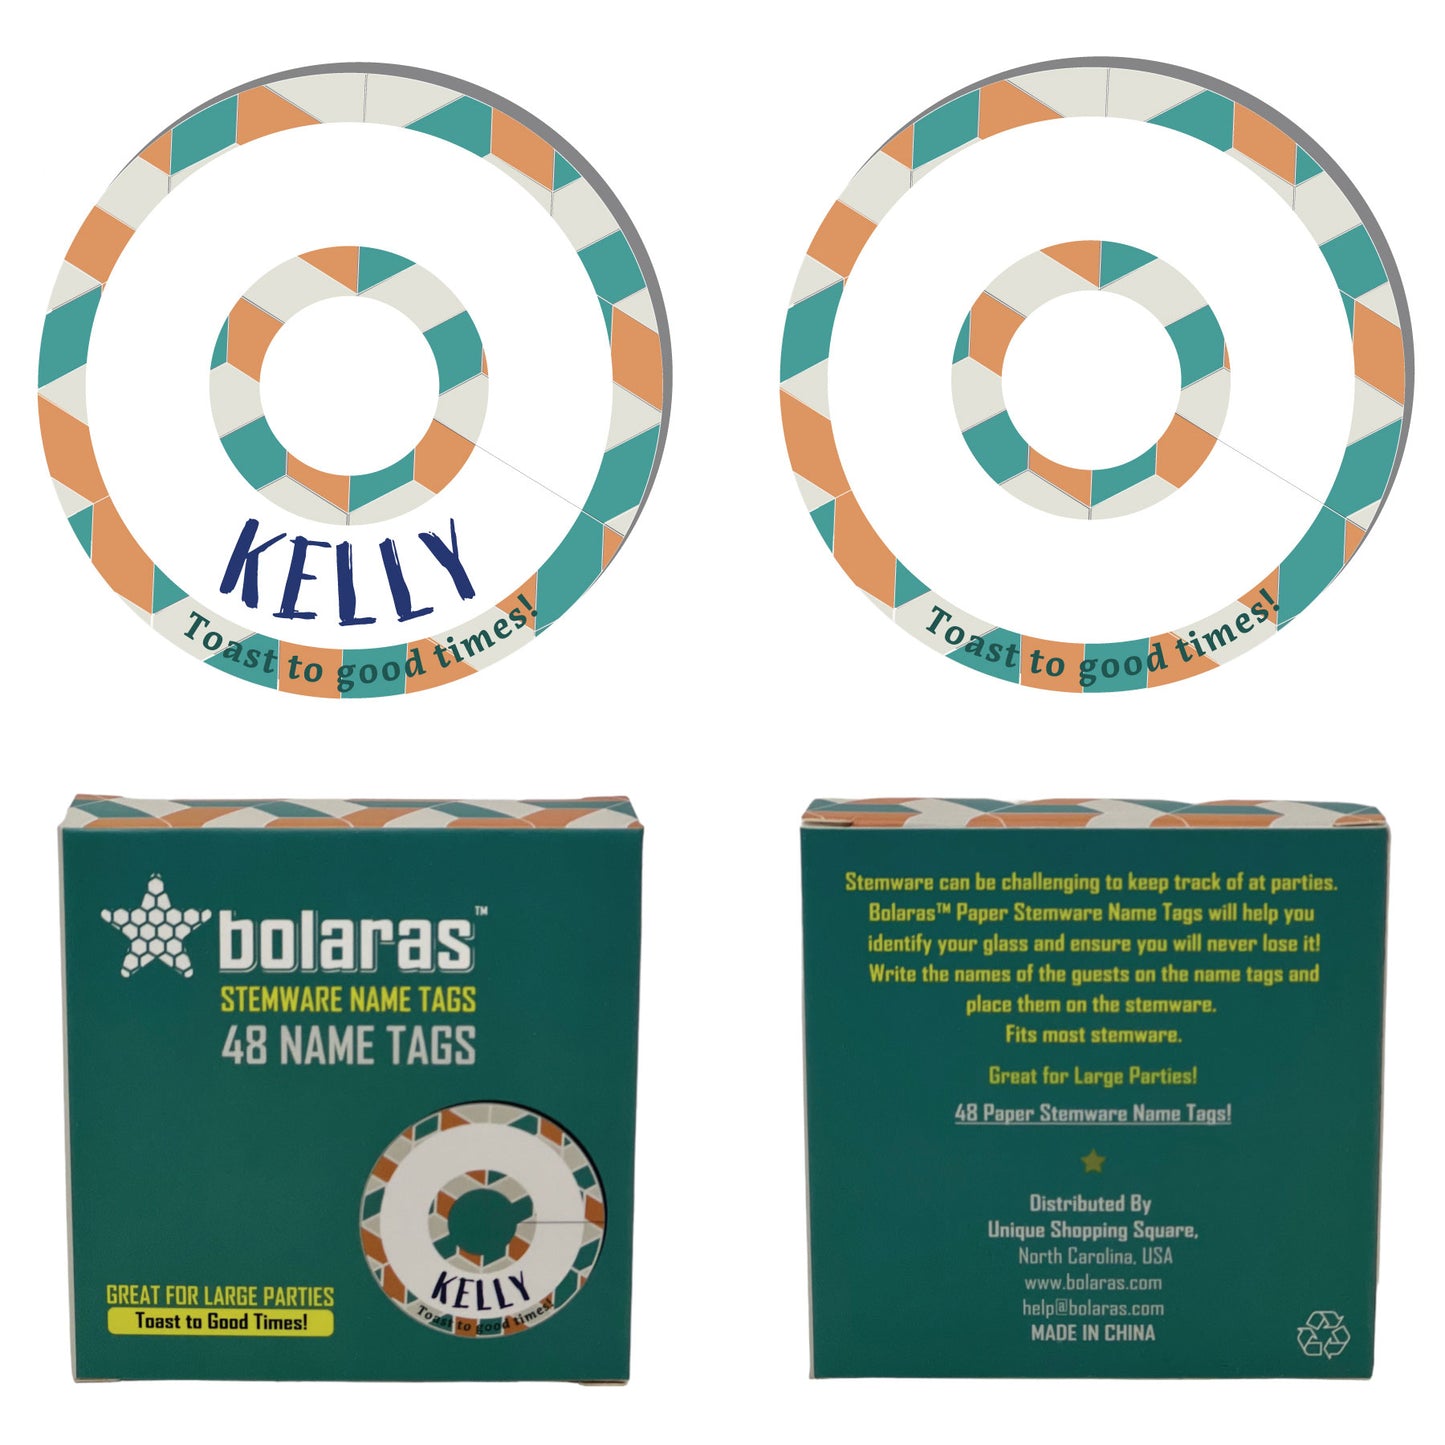 Bolaras Stemware Name Tags - Toast to Good Times! - (48 Tags)